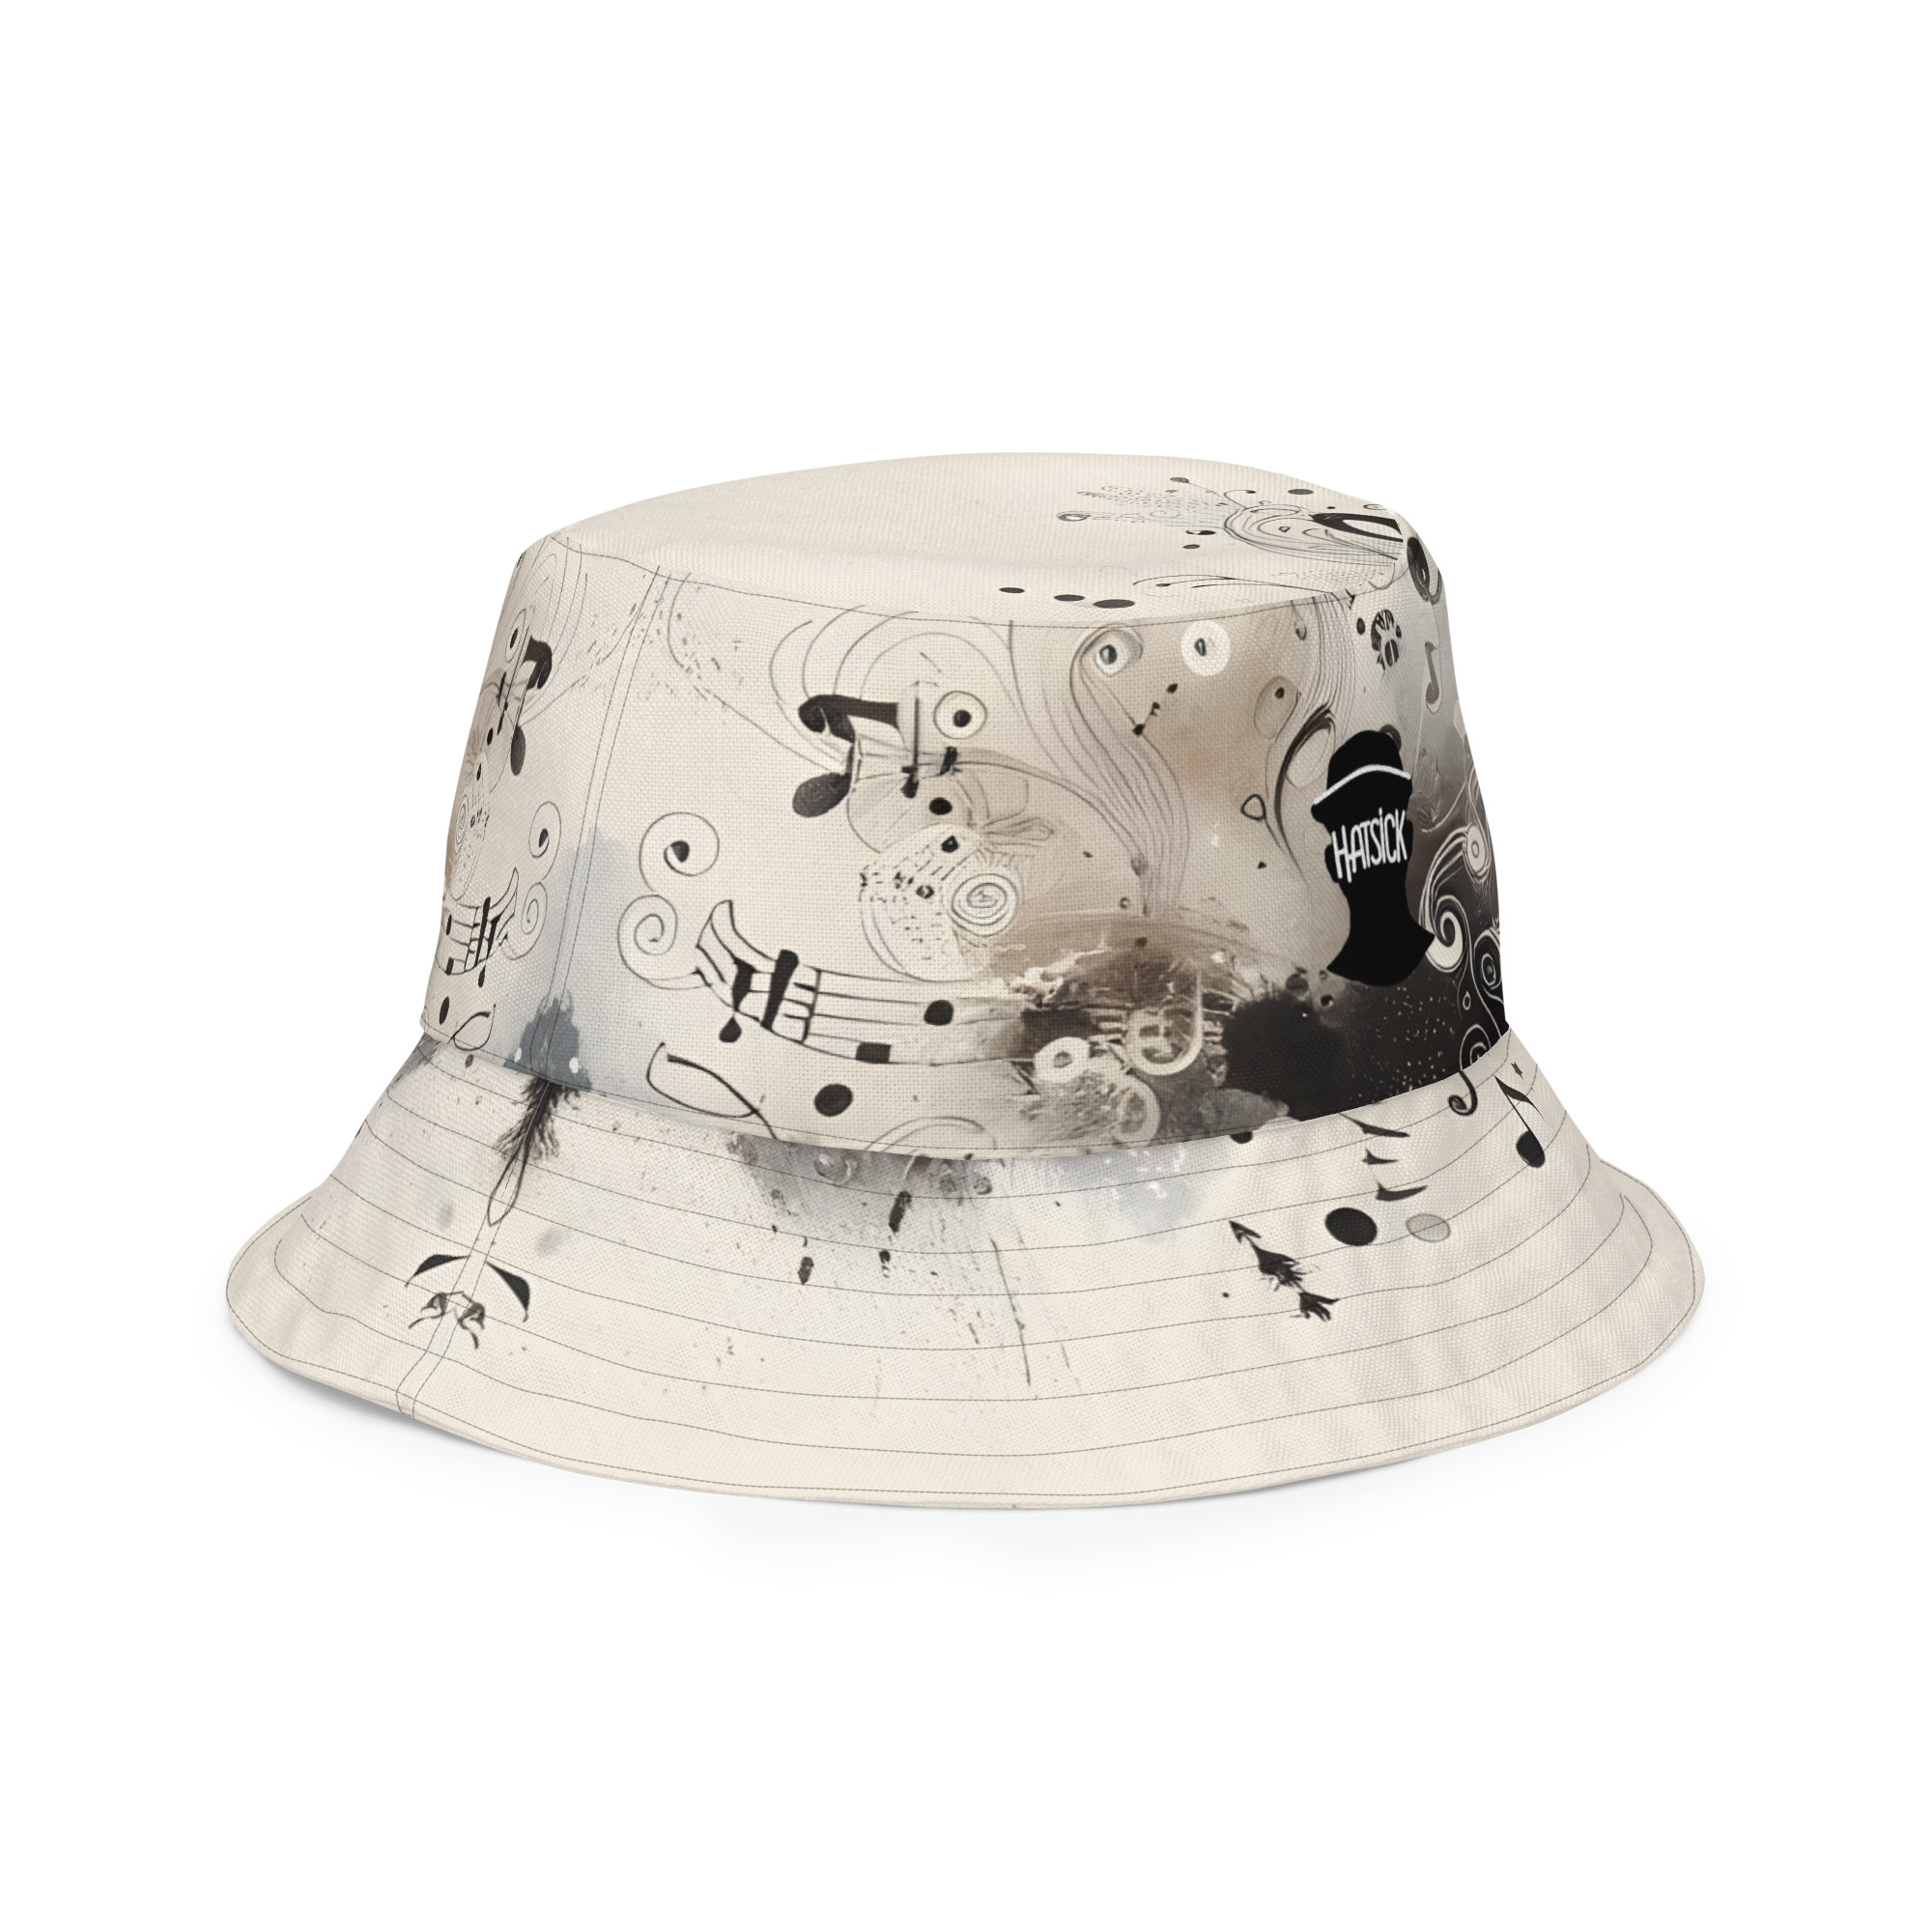 Music Splash Reversible bucket hat